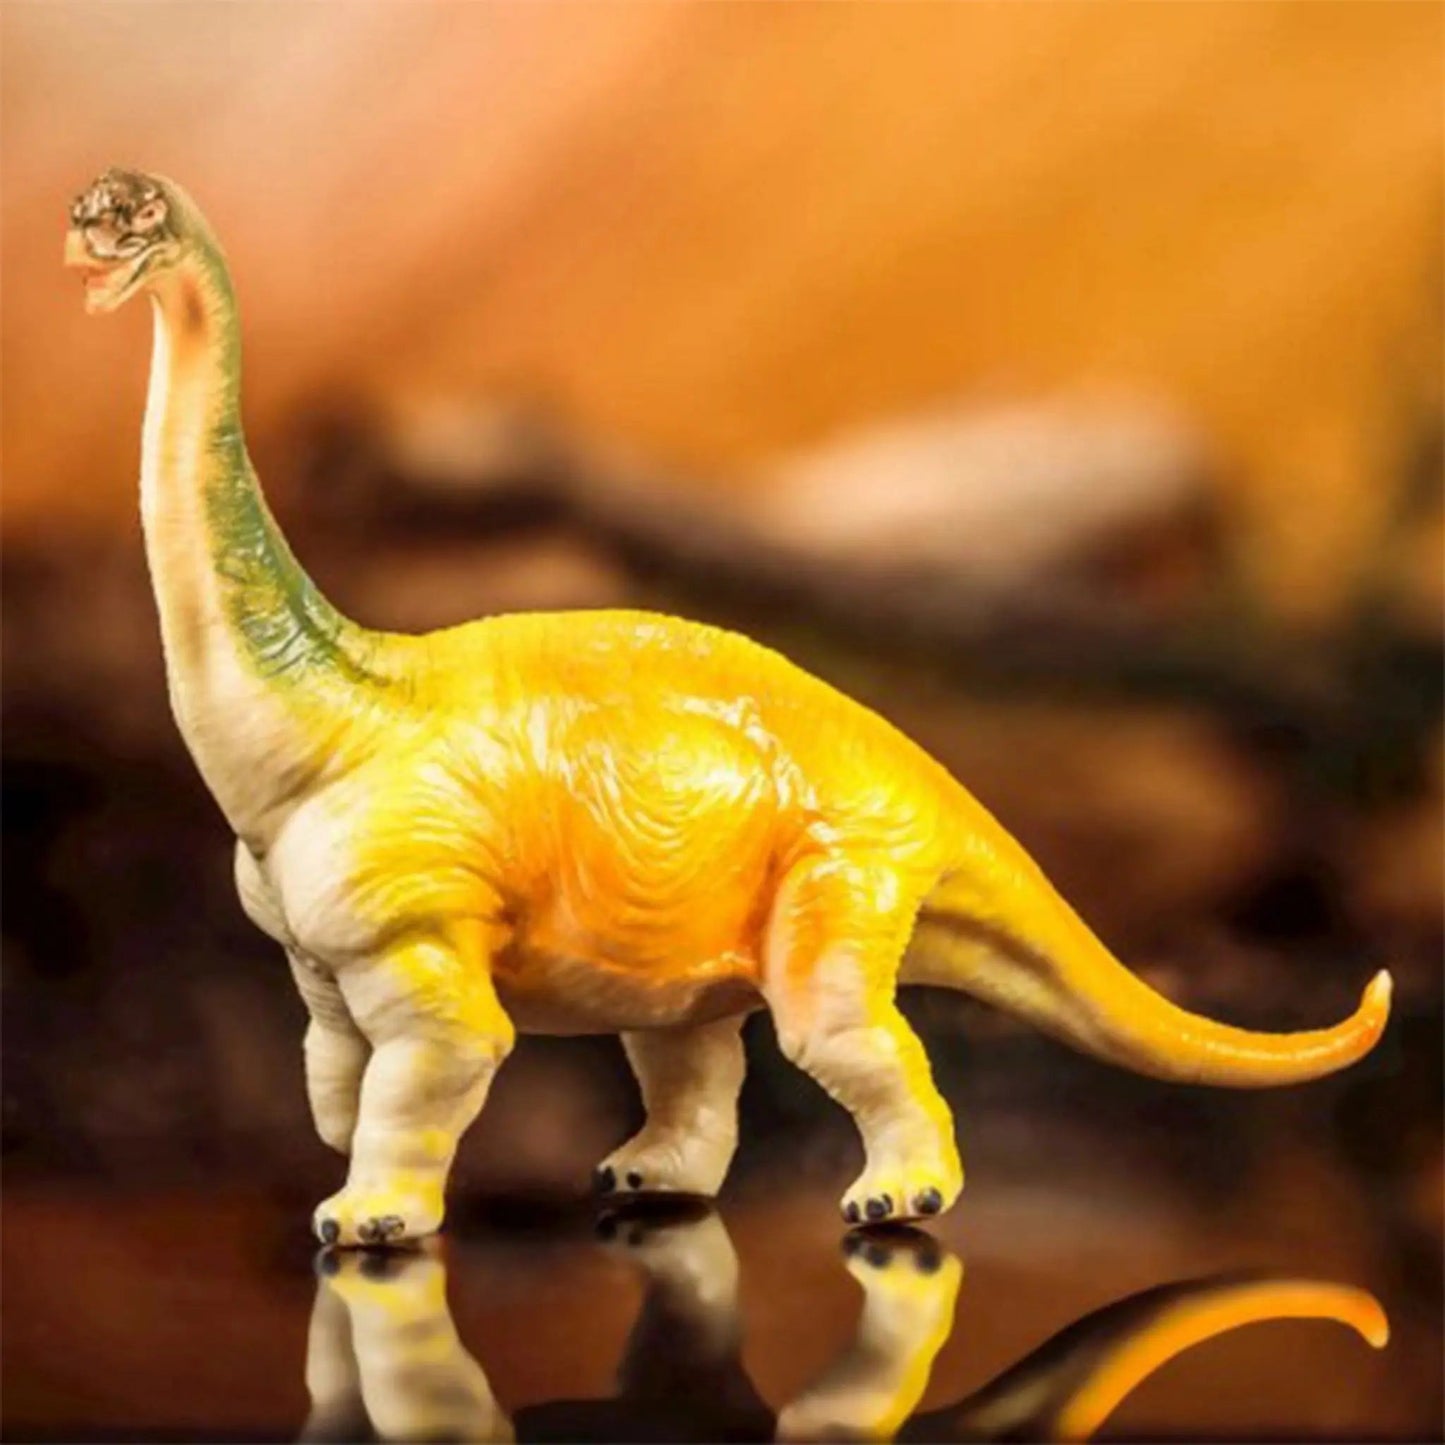 Dinosaur Prehistoric Figures - Tobar - The Forgotten Toy Shop